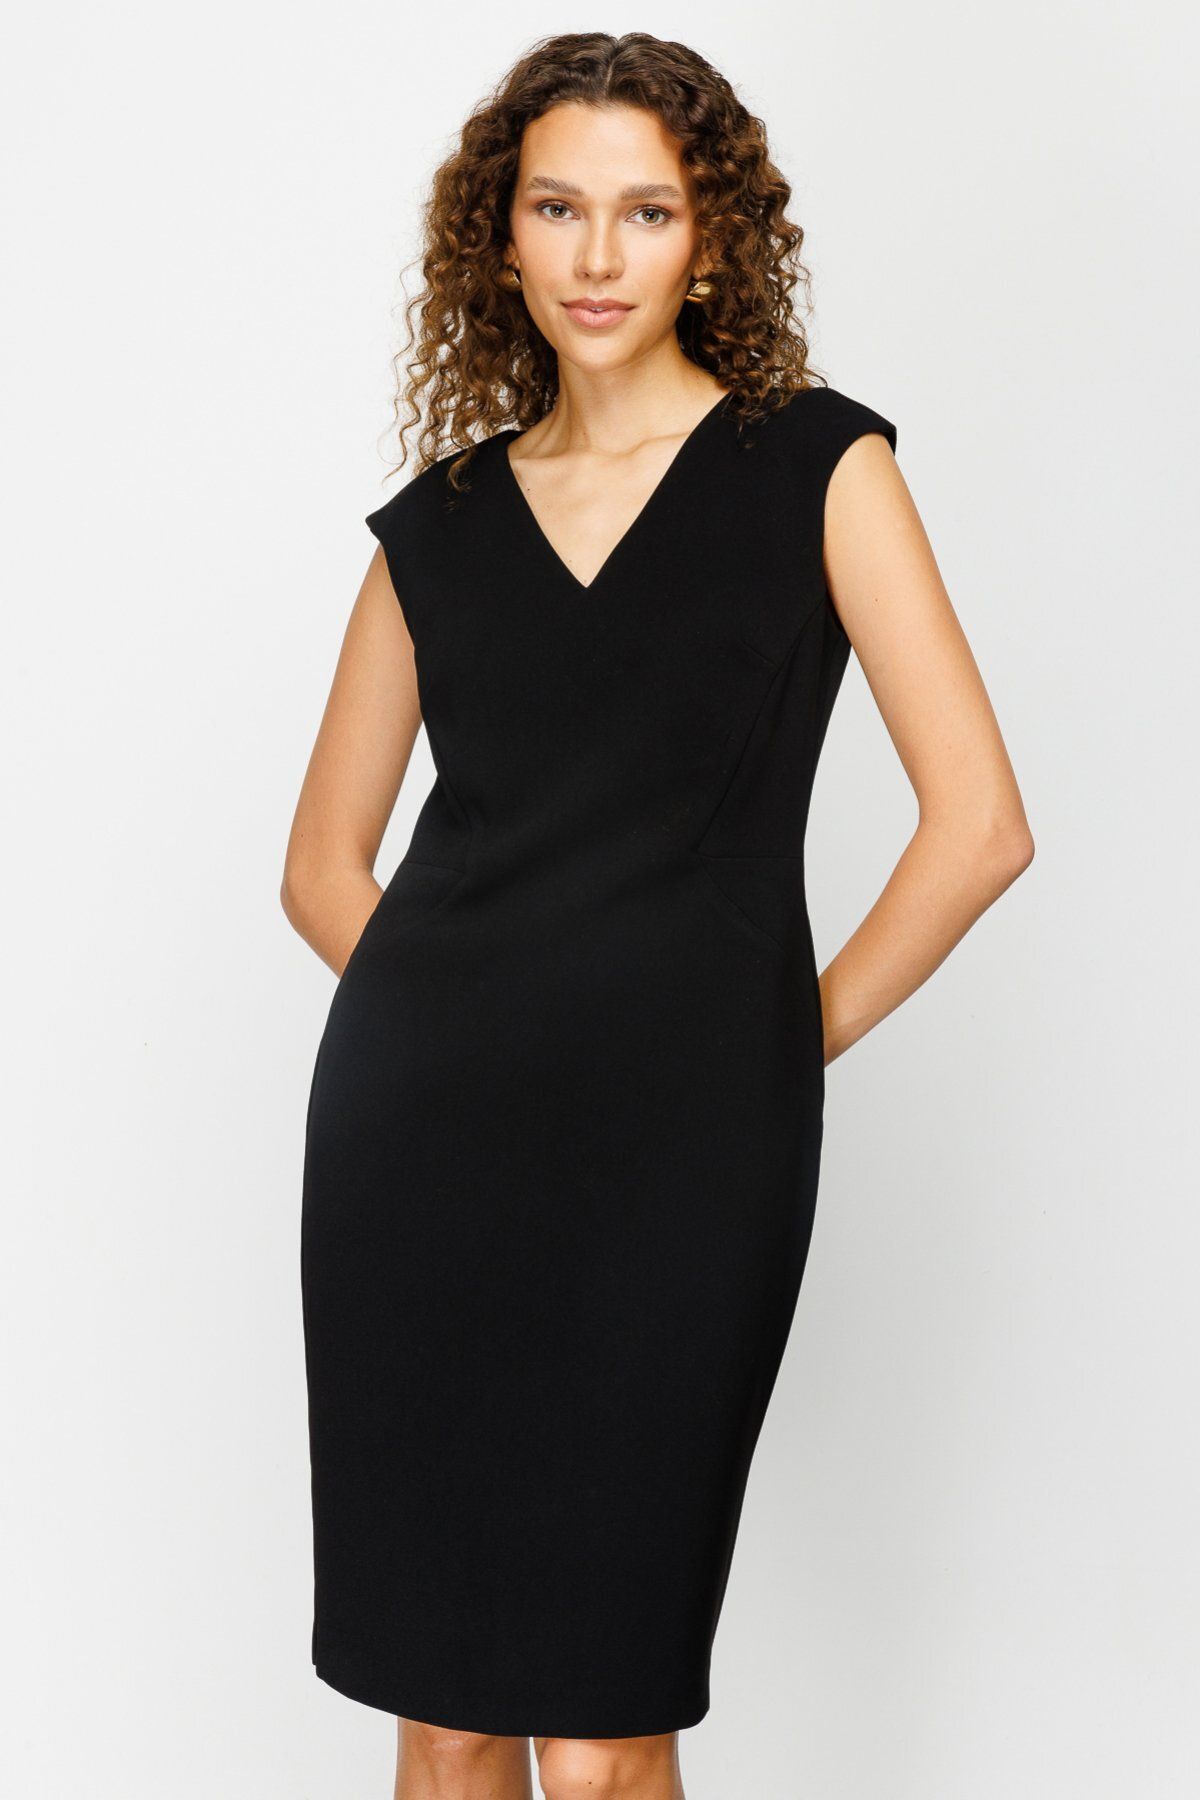 Ekol Kadın V Yaka Krep Elbise 5005 Siyah